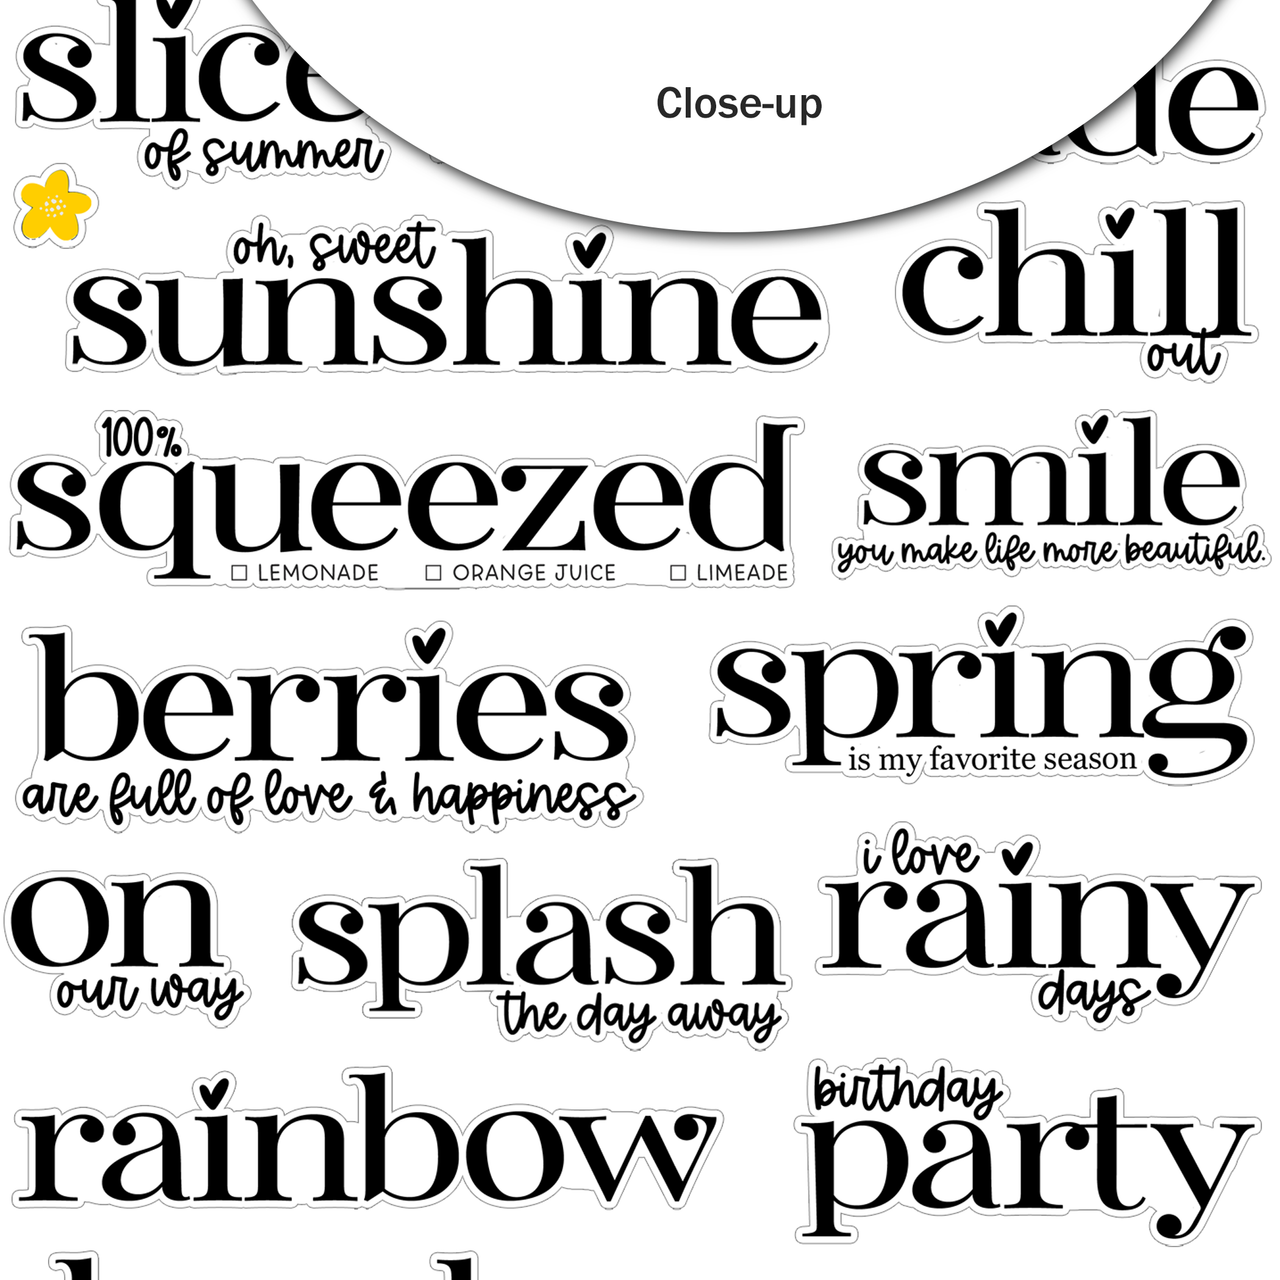 Stickers | Fun in the Sun Words | Clear